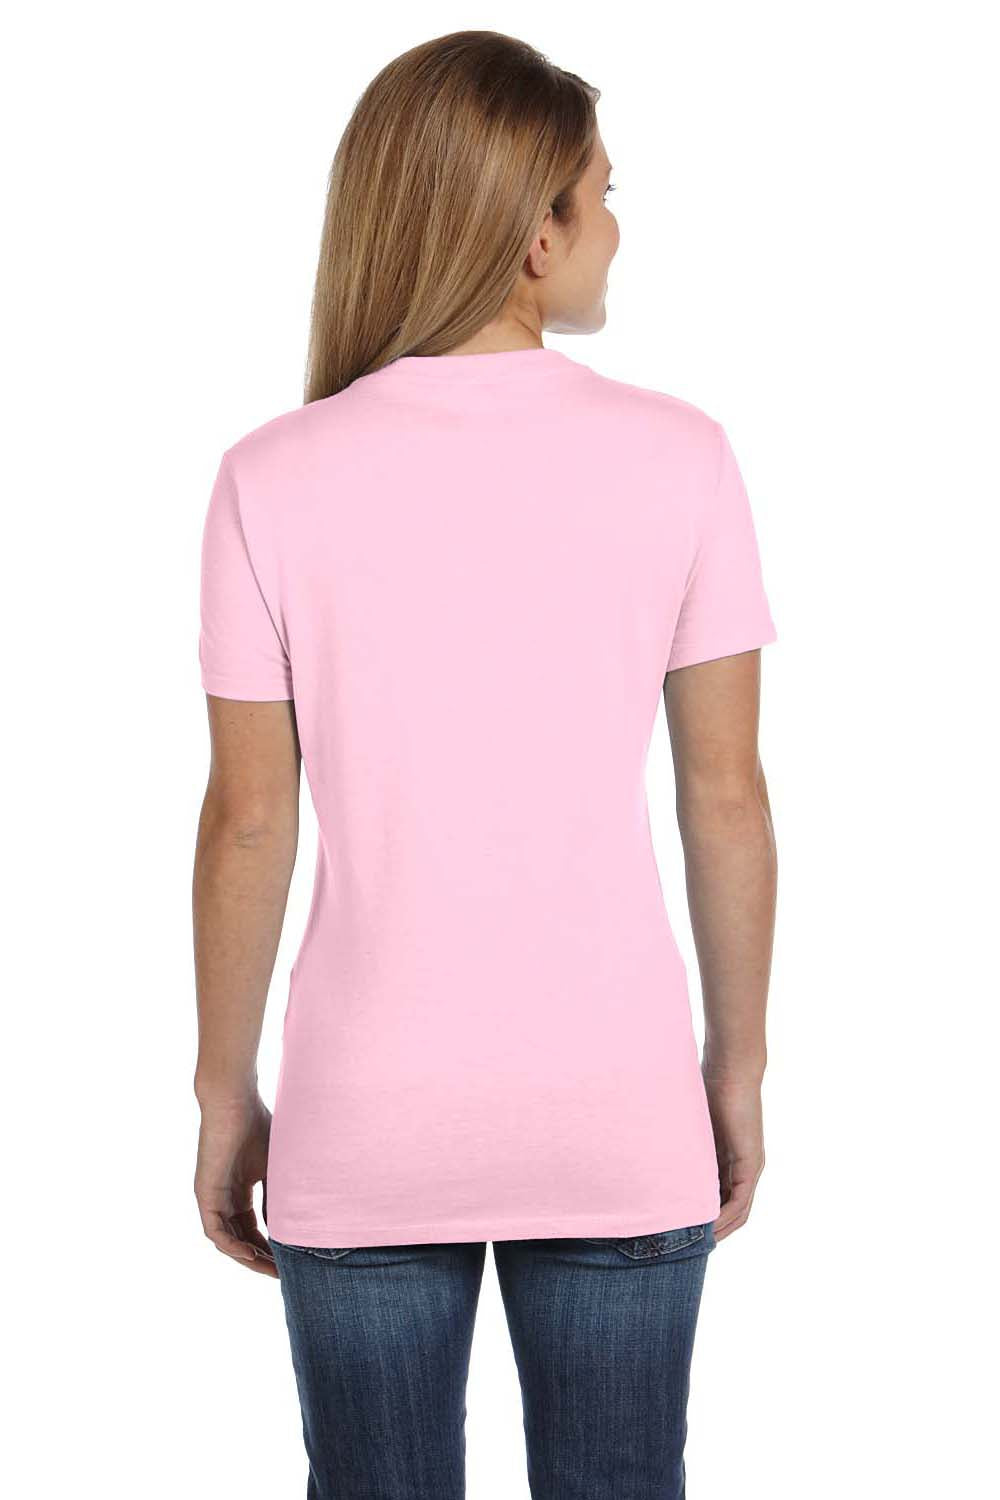 Hanes S04V Womens Nano-T Short Sleeve V-Neck T-Shirt Pale Pink Back